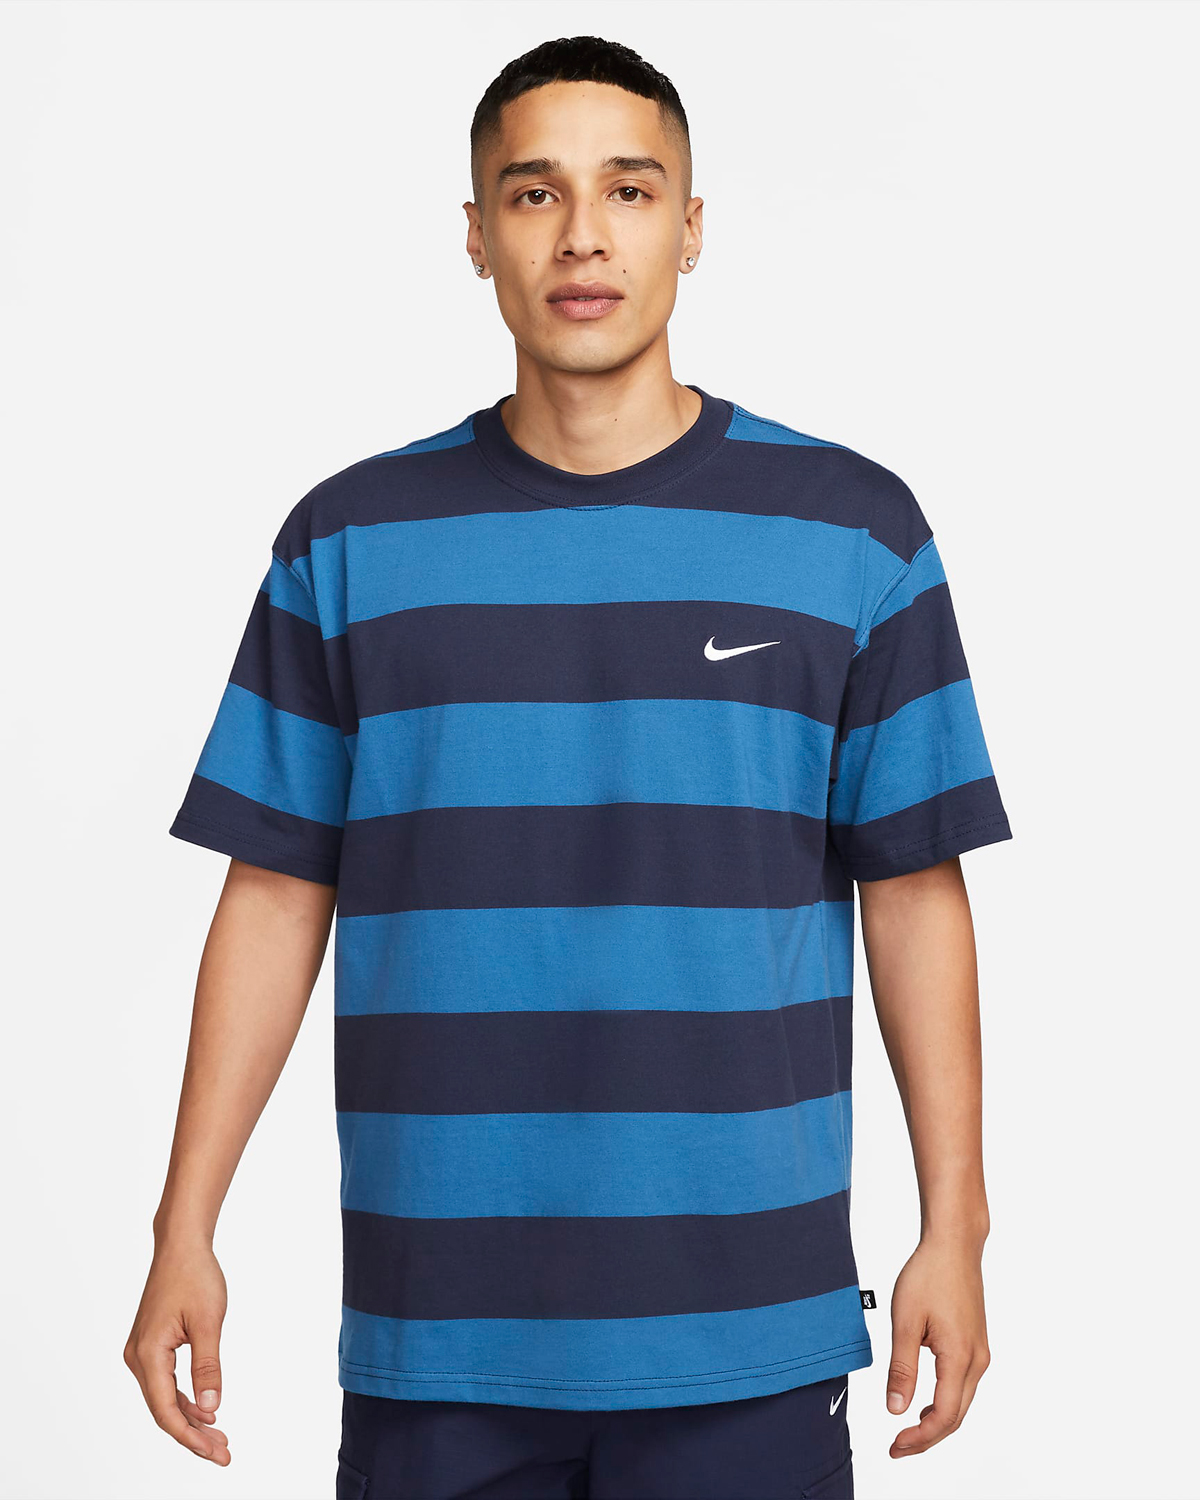 Nike-SB-T-Shirt-Industrial-Blue-Midnight-Navy